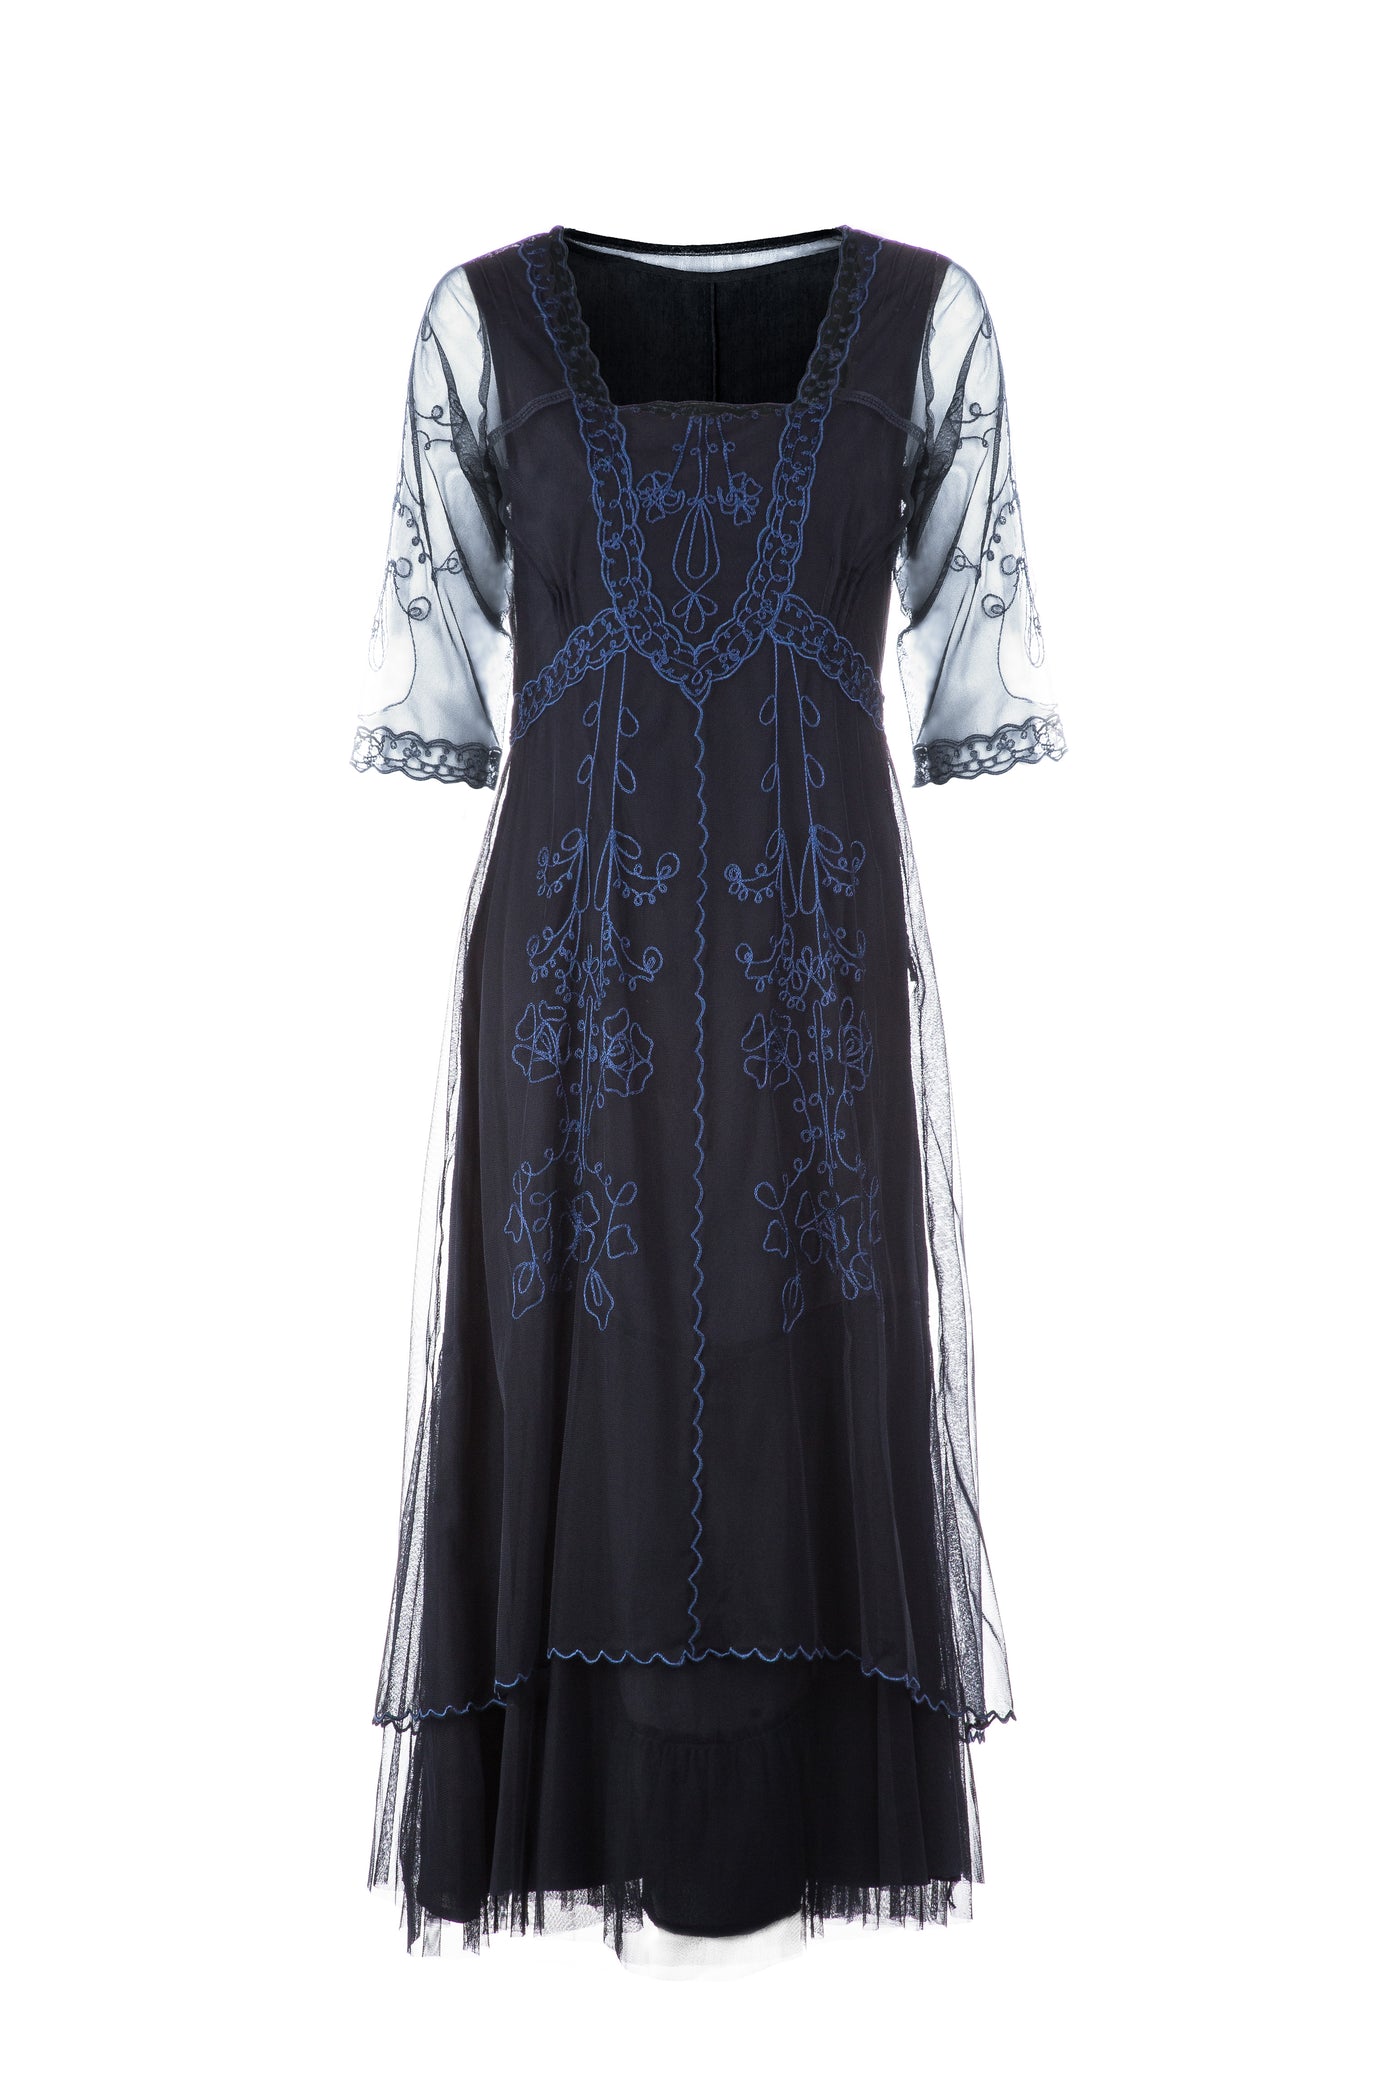 Nataya Mary CL-202 Sapphire Dress